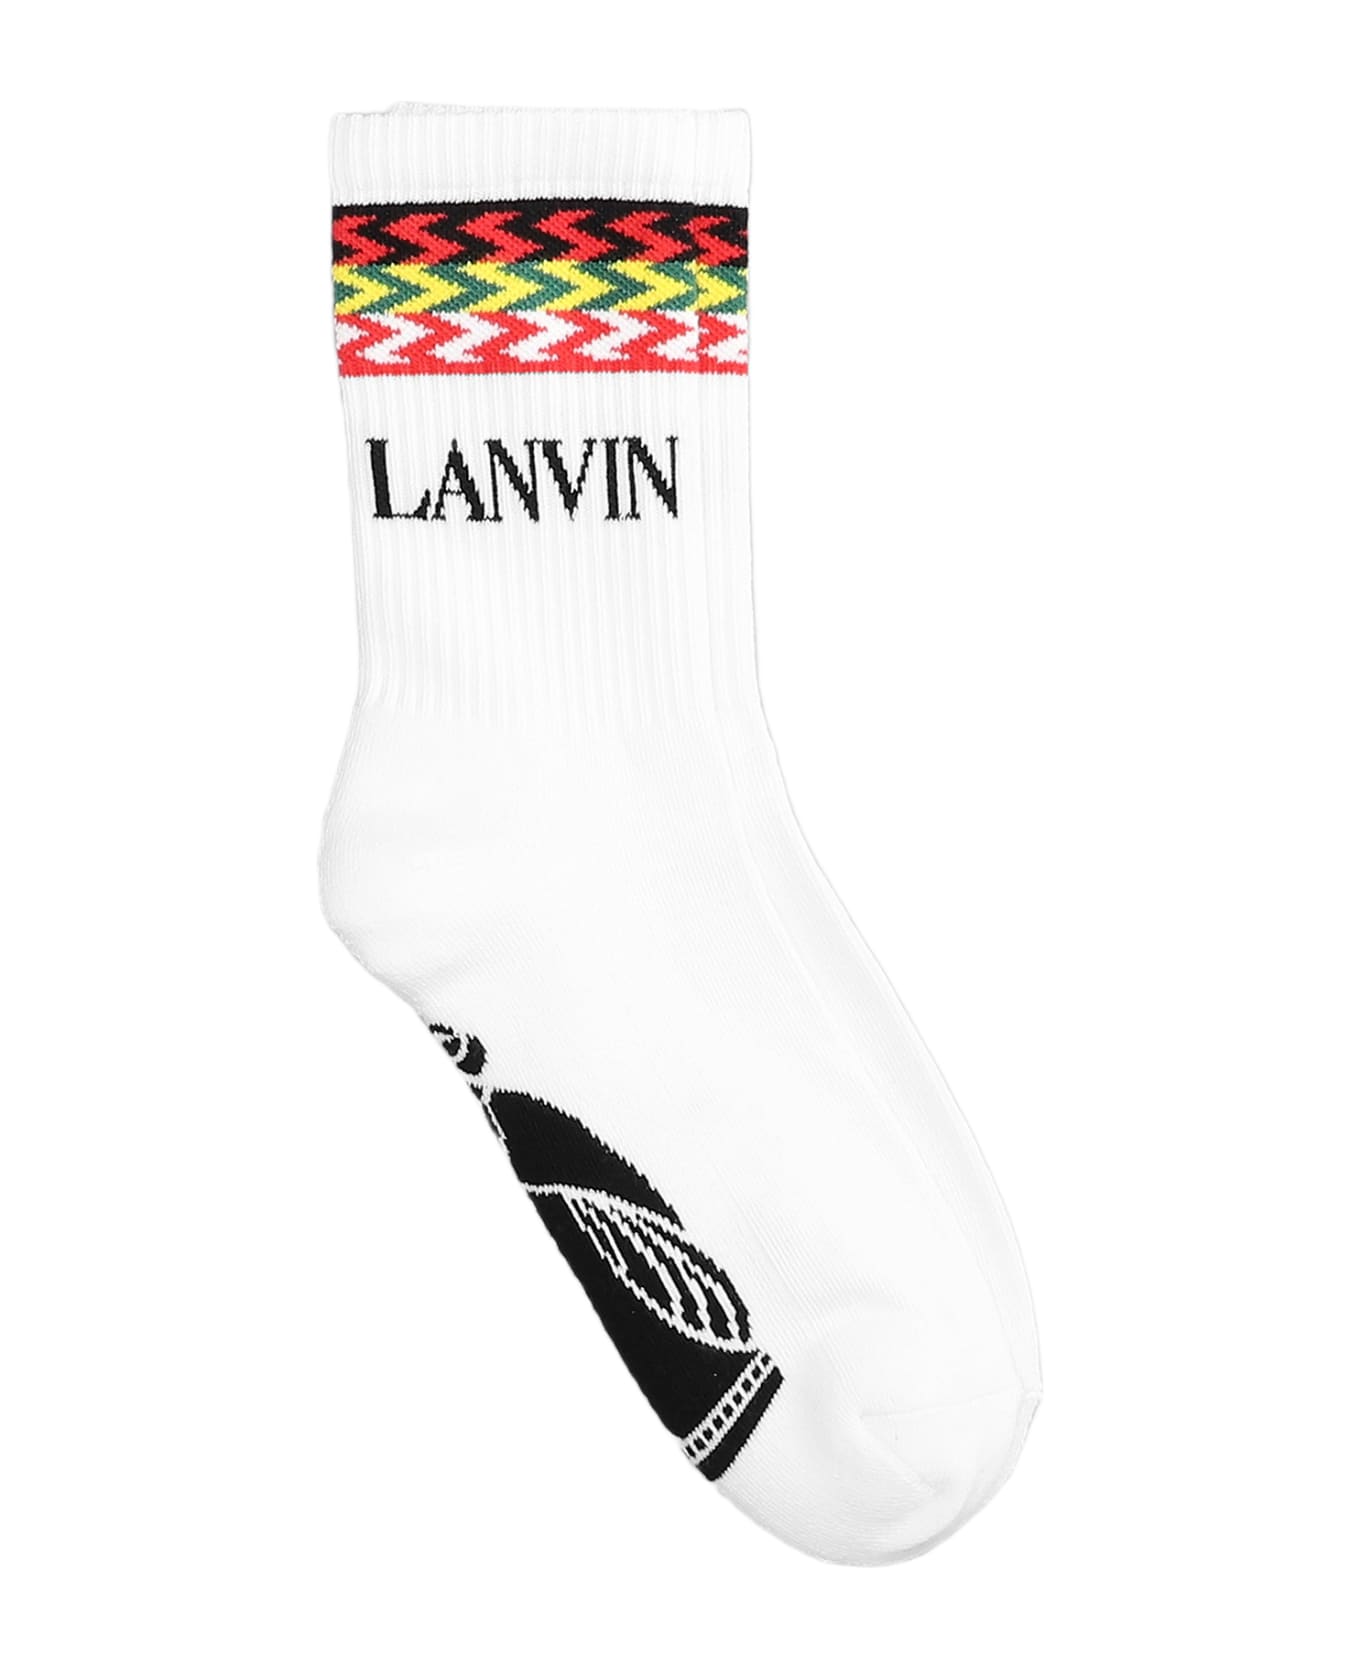 Lanvin Socks In Black And White Cotton - black and white